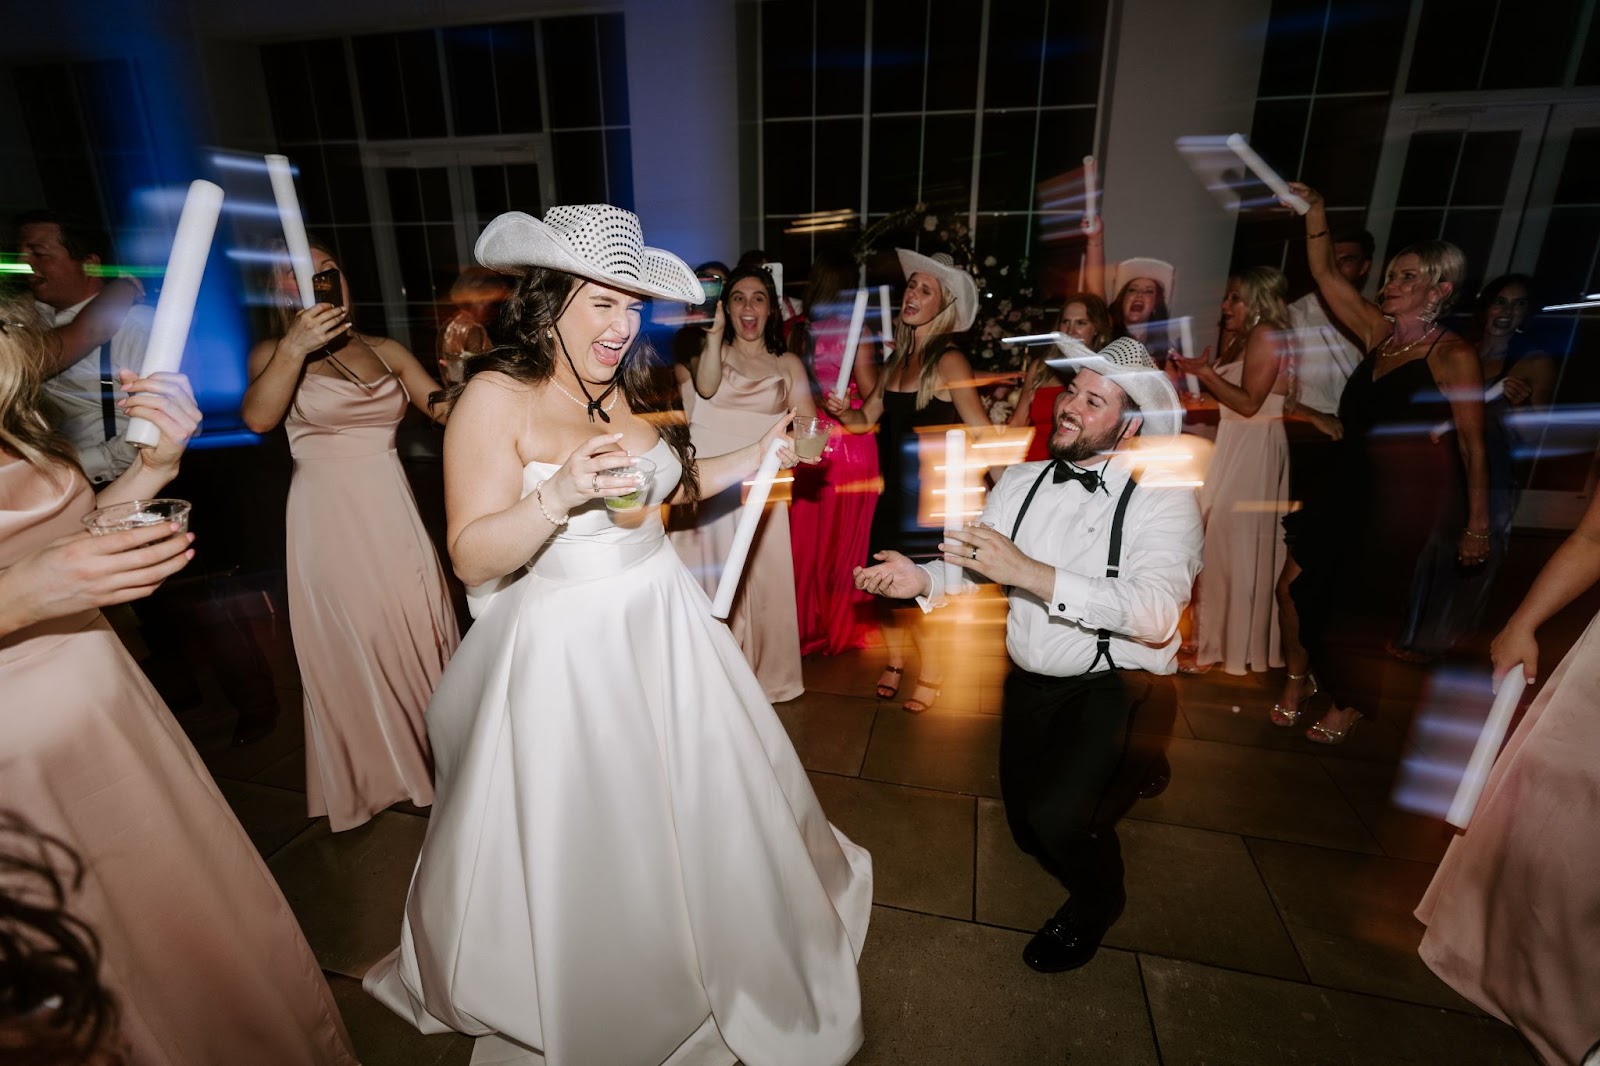 Houston Wedding Photographer Brandi Simone Photography
The Olana Wedding
shutter drag dance photos 